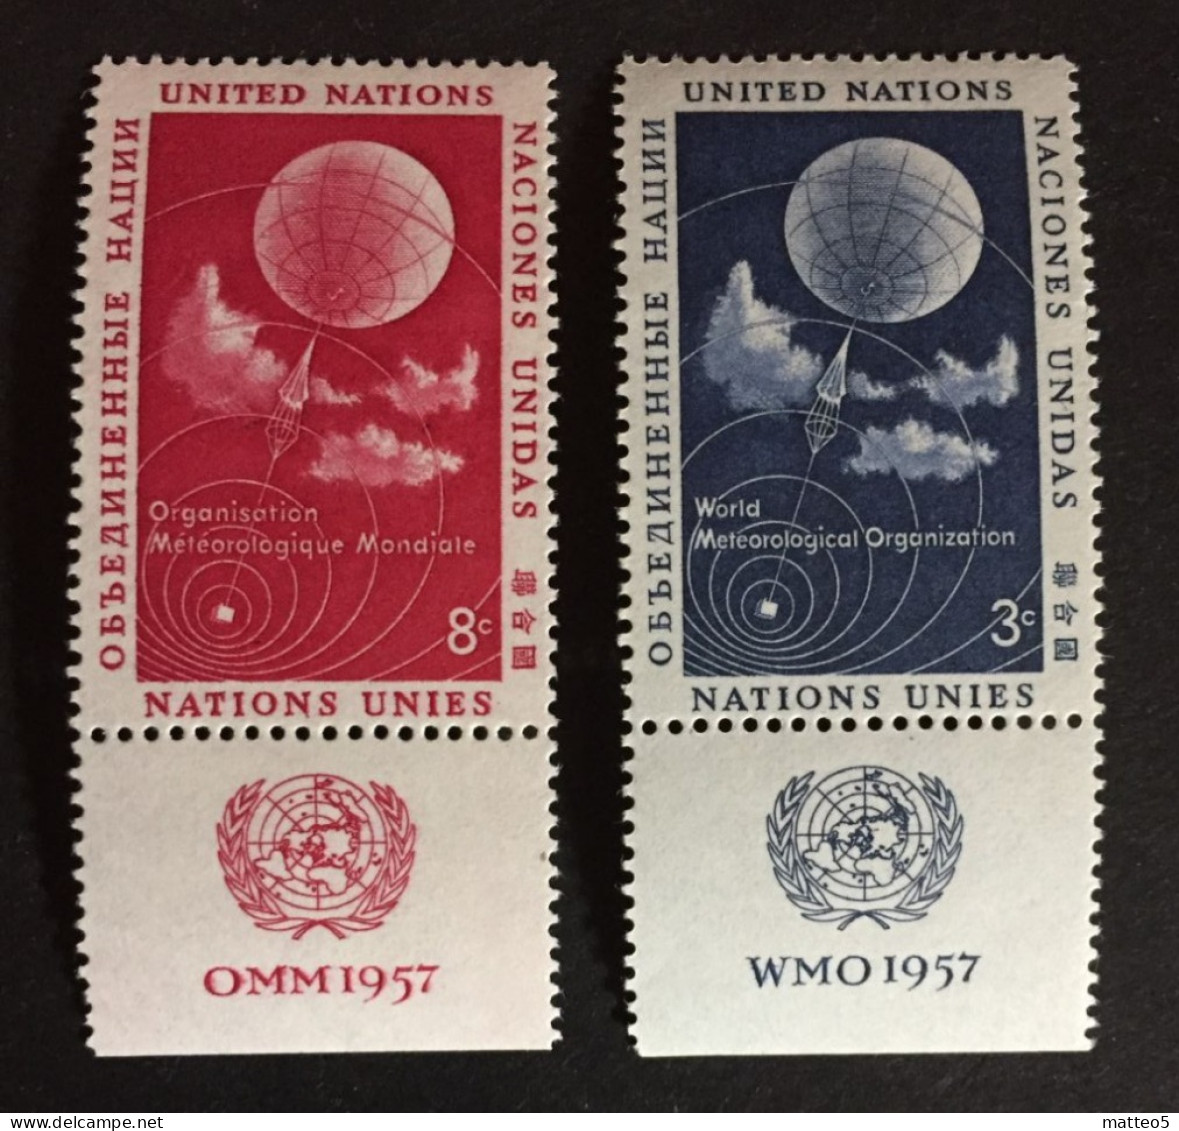 1957 - United Nations UNO UN ONU - World Meteorological Organization - Weather Satelite - Unused - Unused Stamps